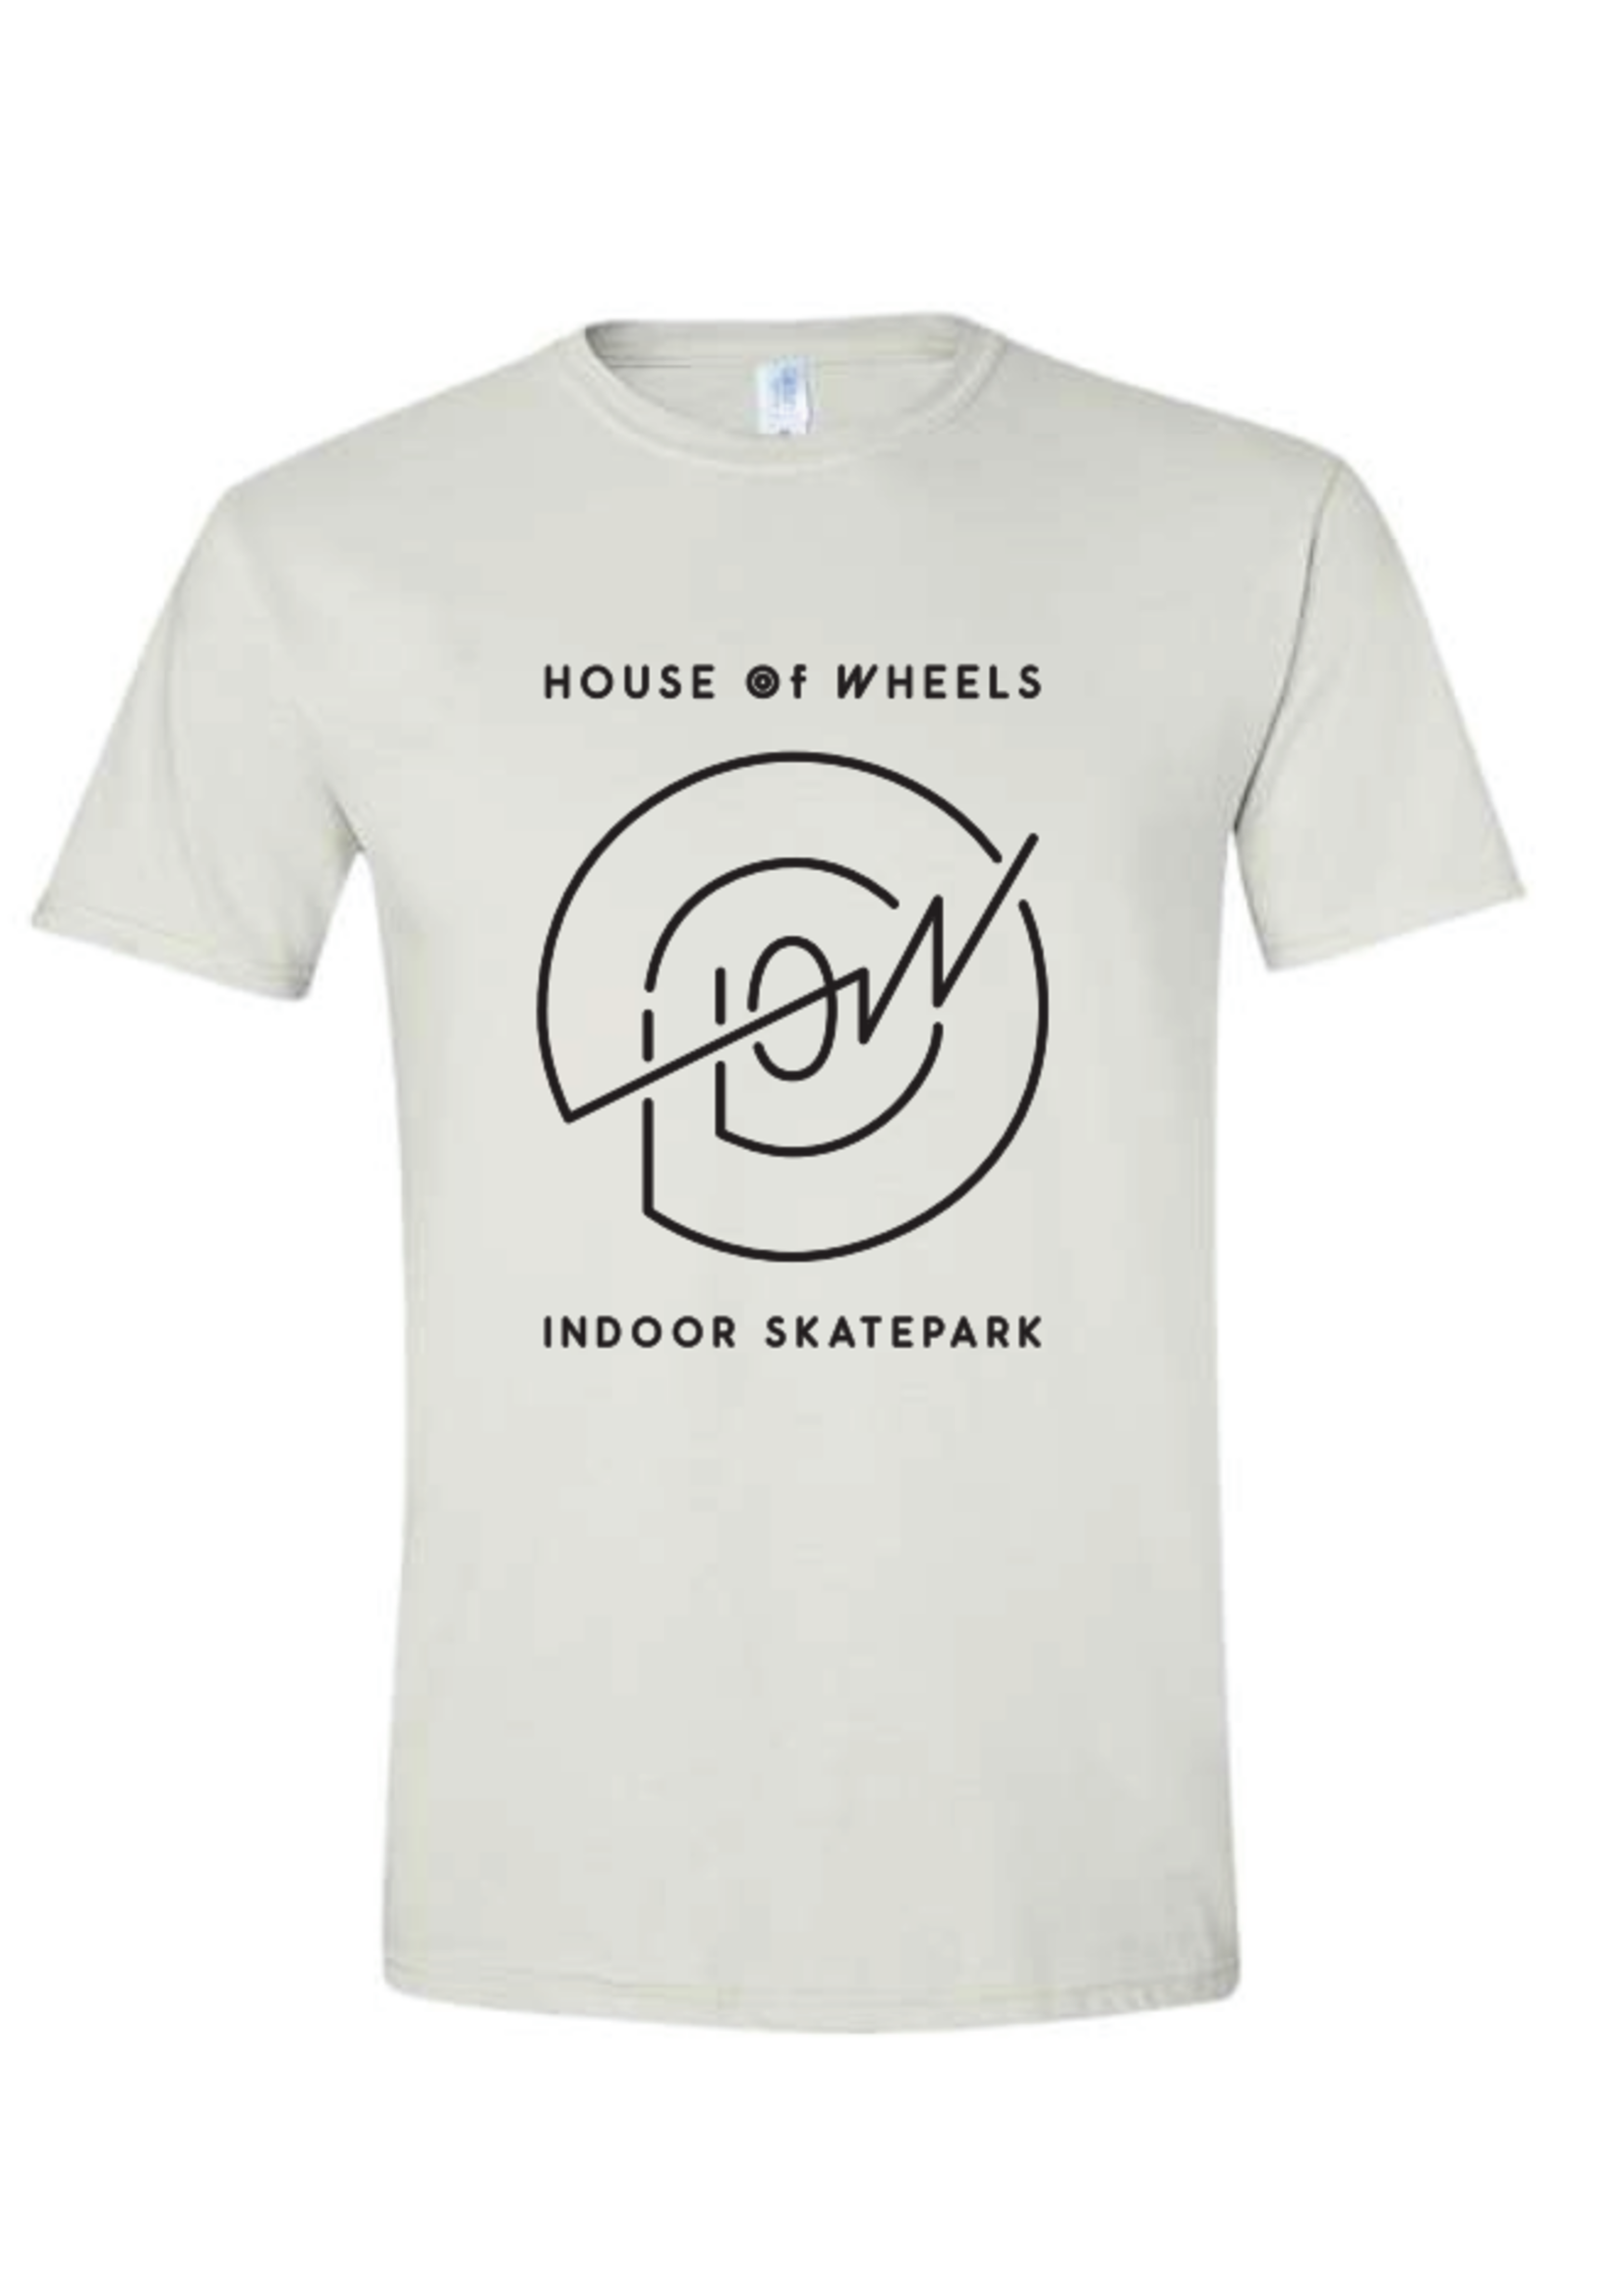 House of Wheels HOW - T-shirt Indoor skatepark (Adult) - PRE ORDER